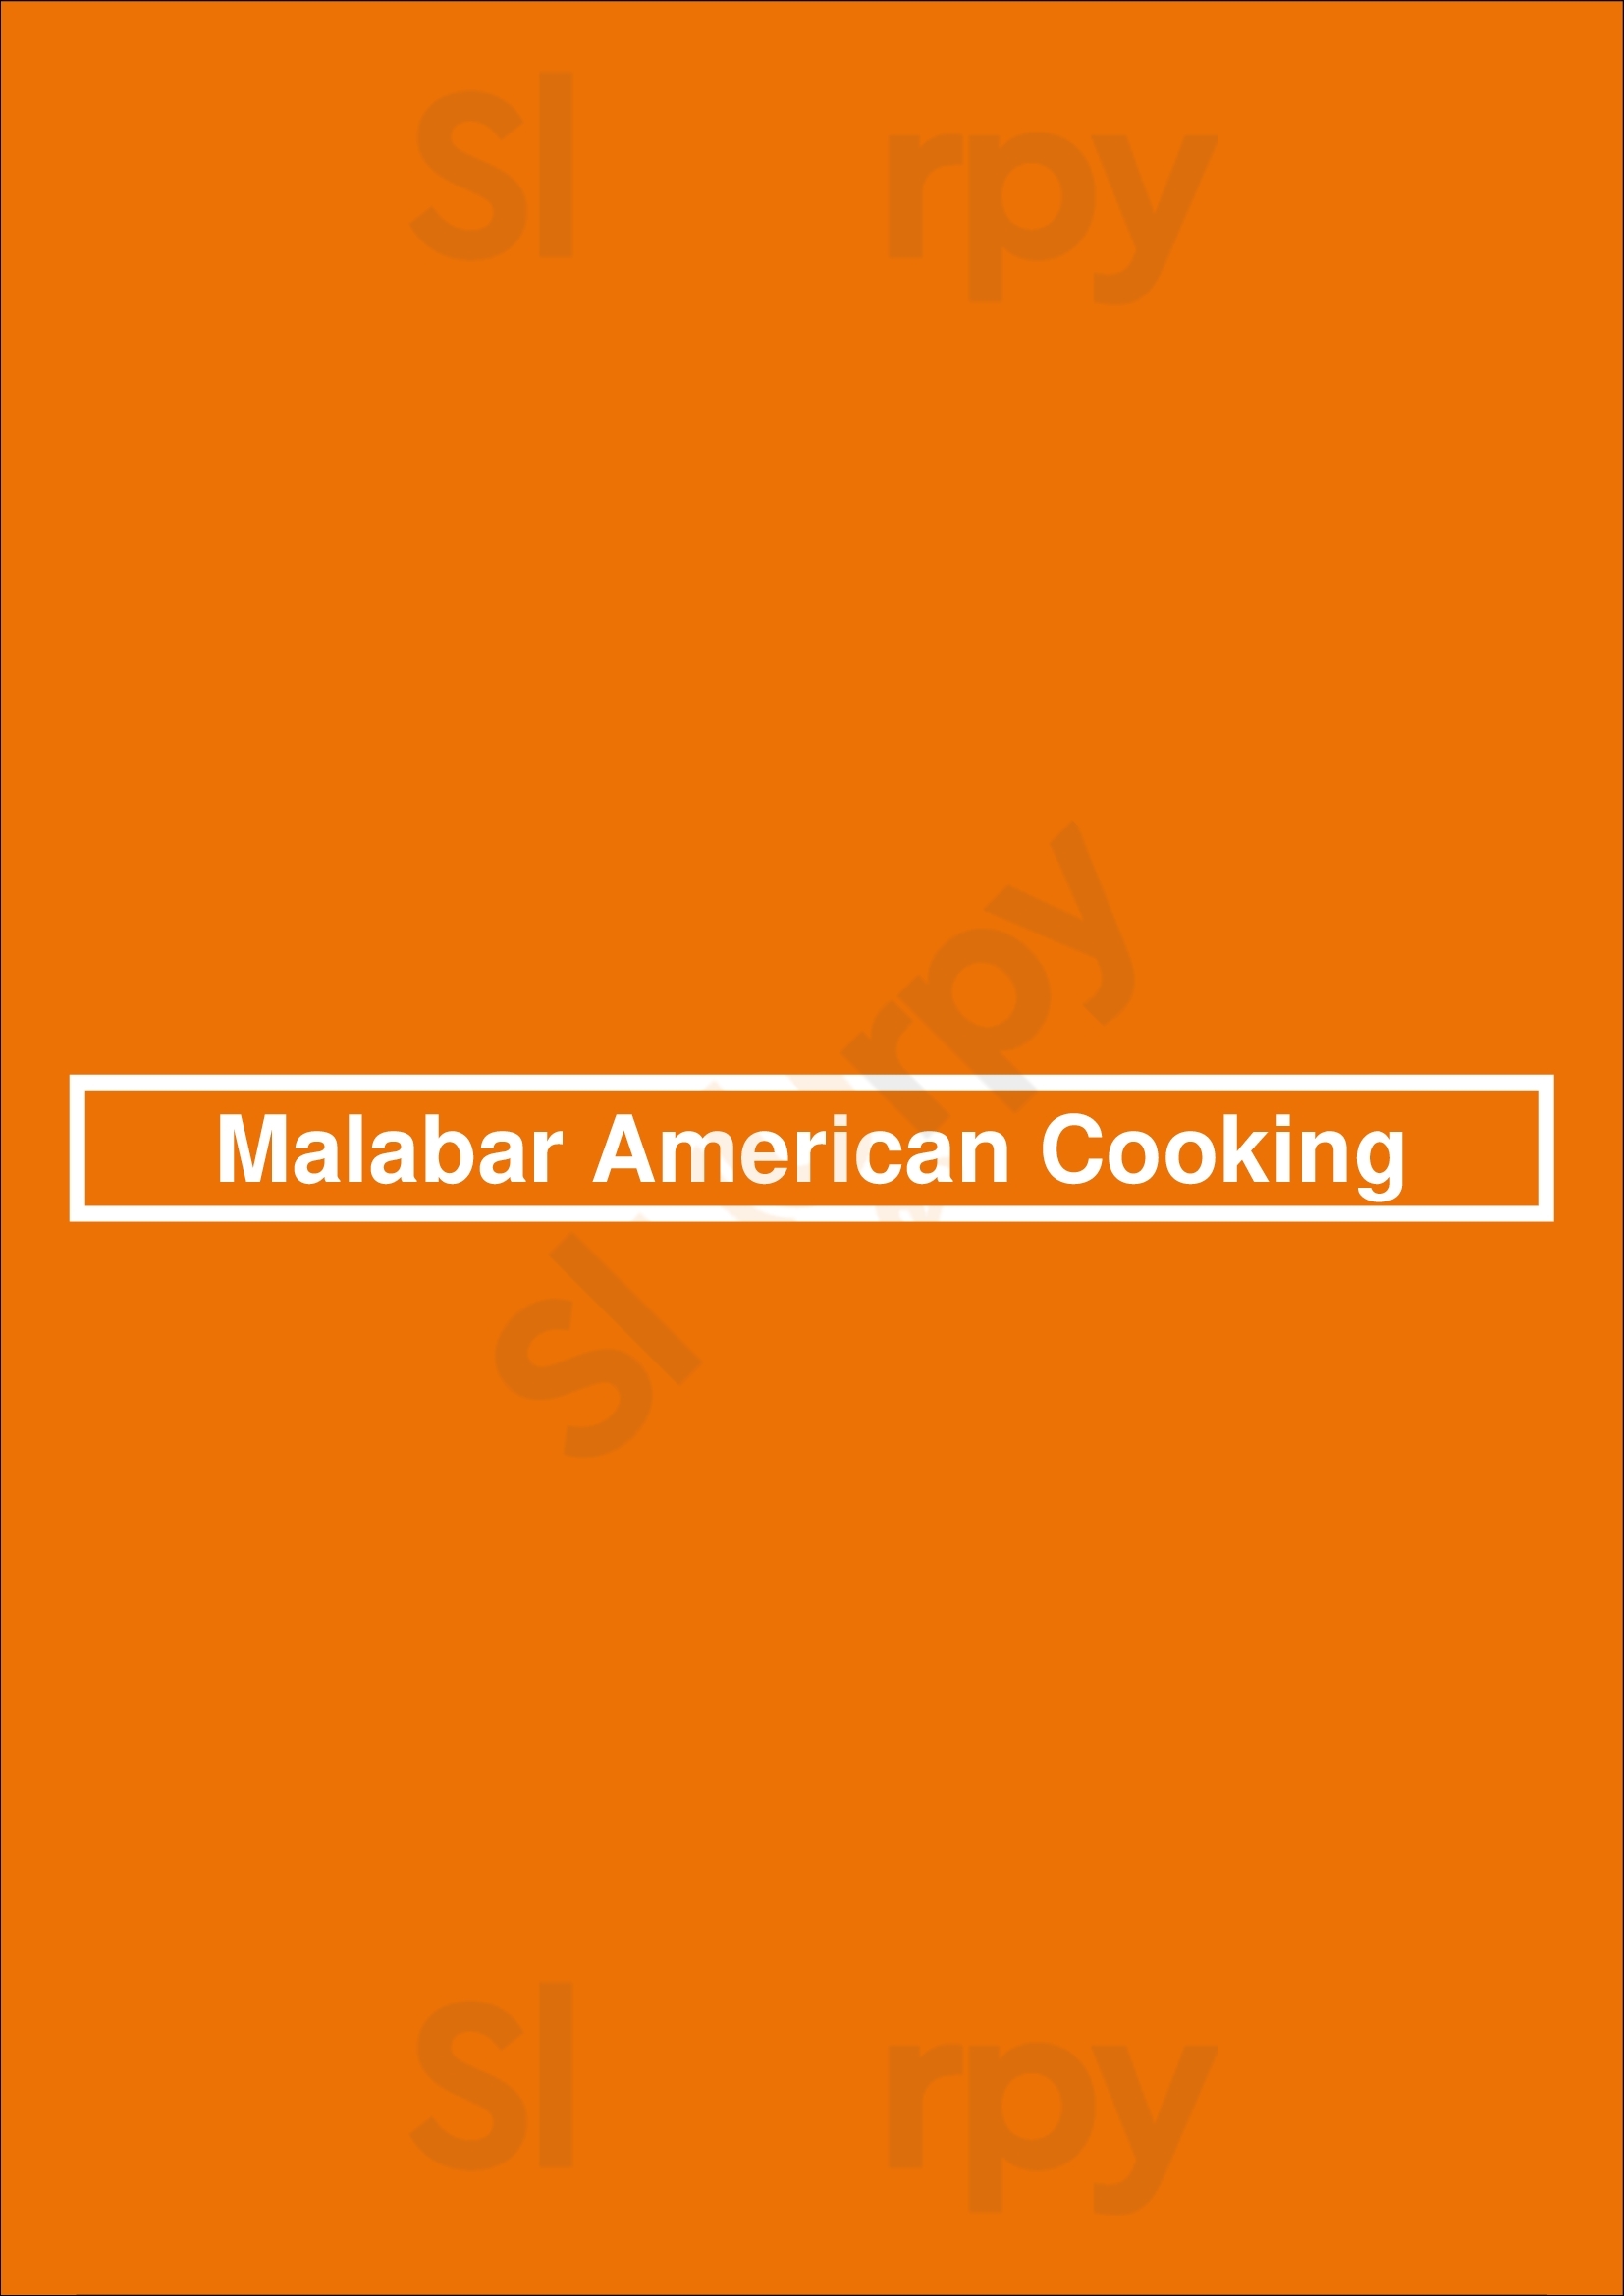 Malabar American Cooking Sacramento Menu - 1